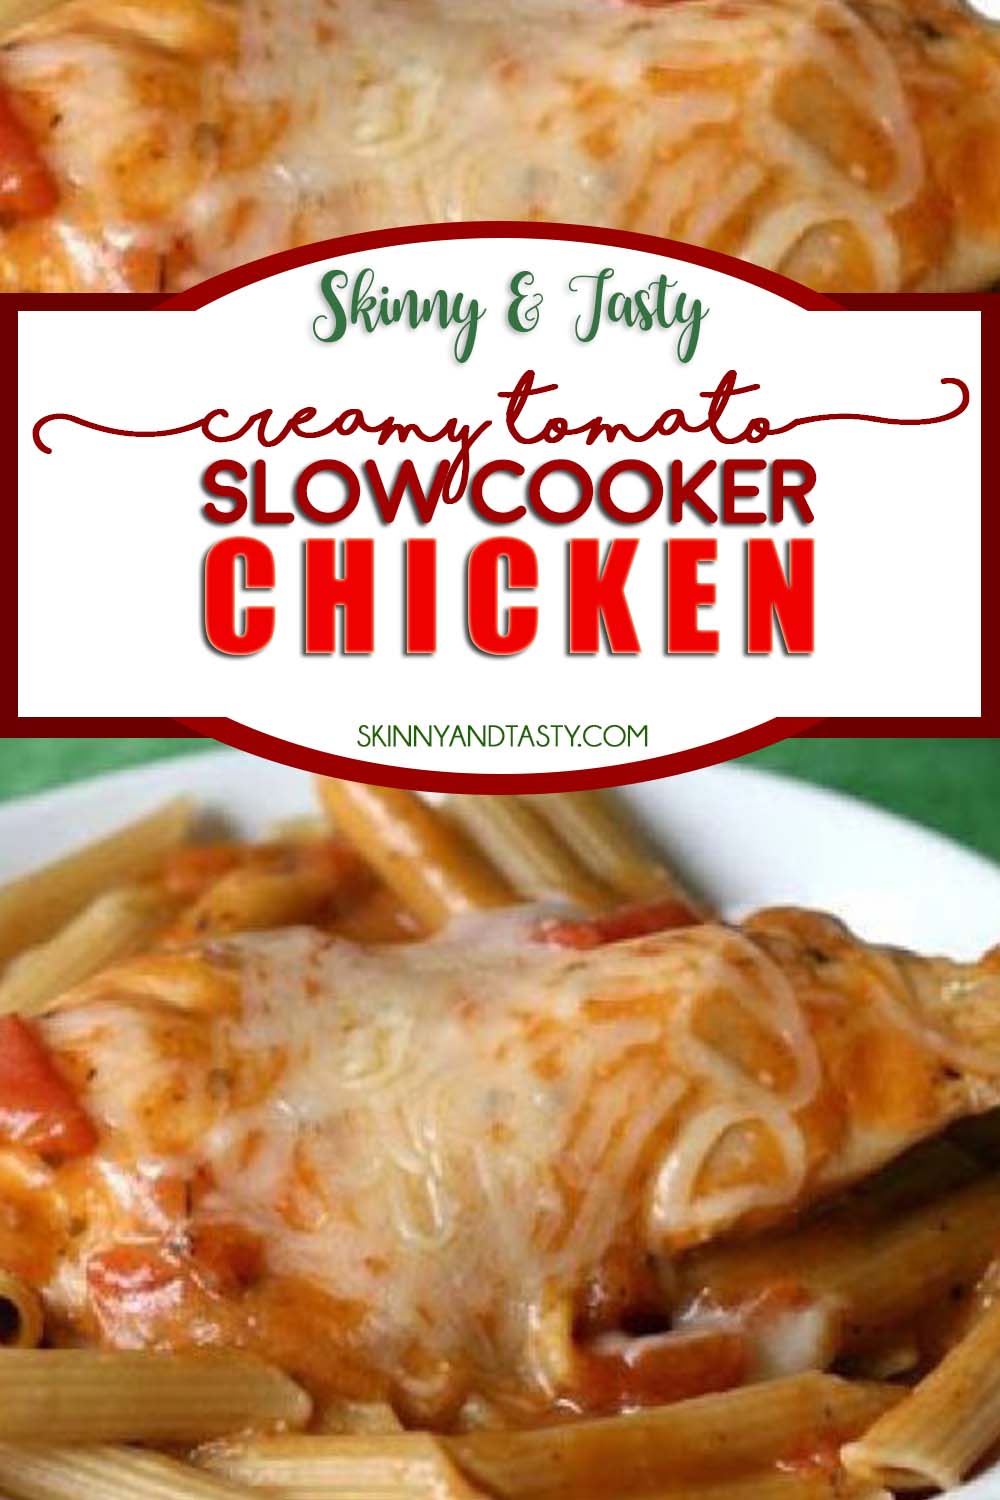 Slowcooker Chicken Recipe